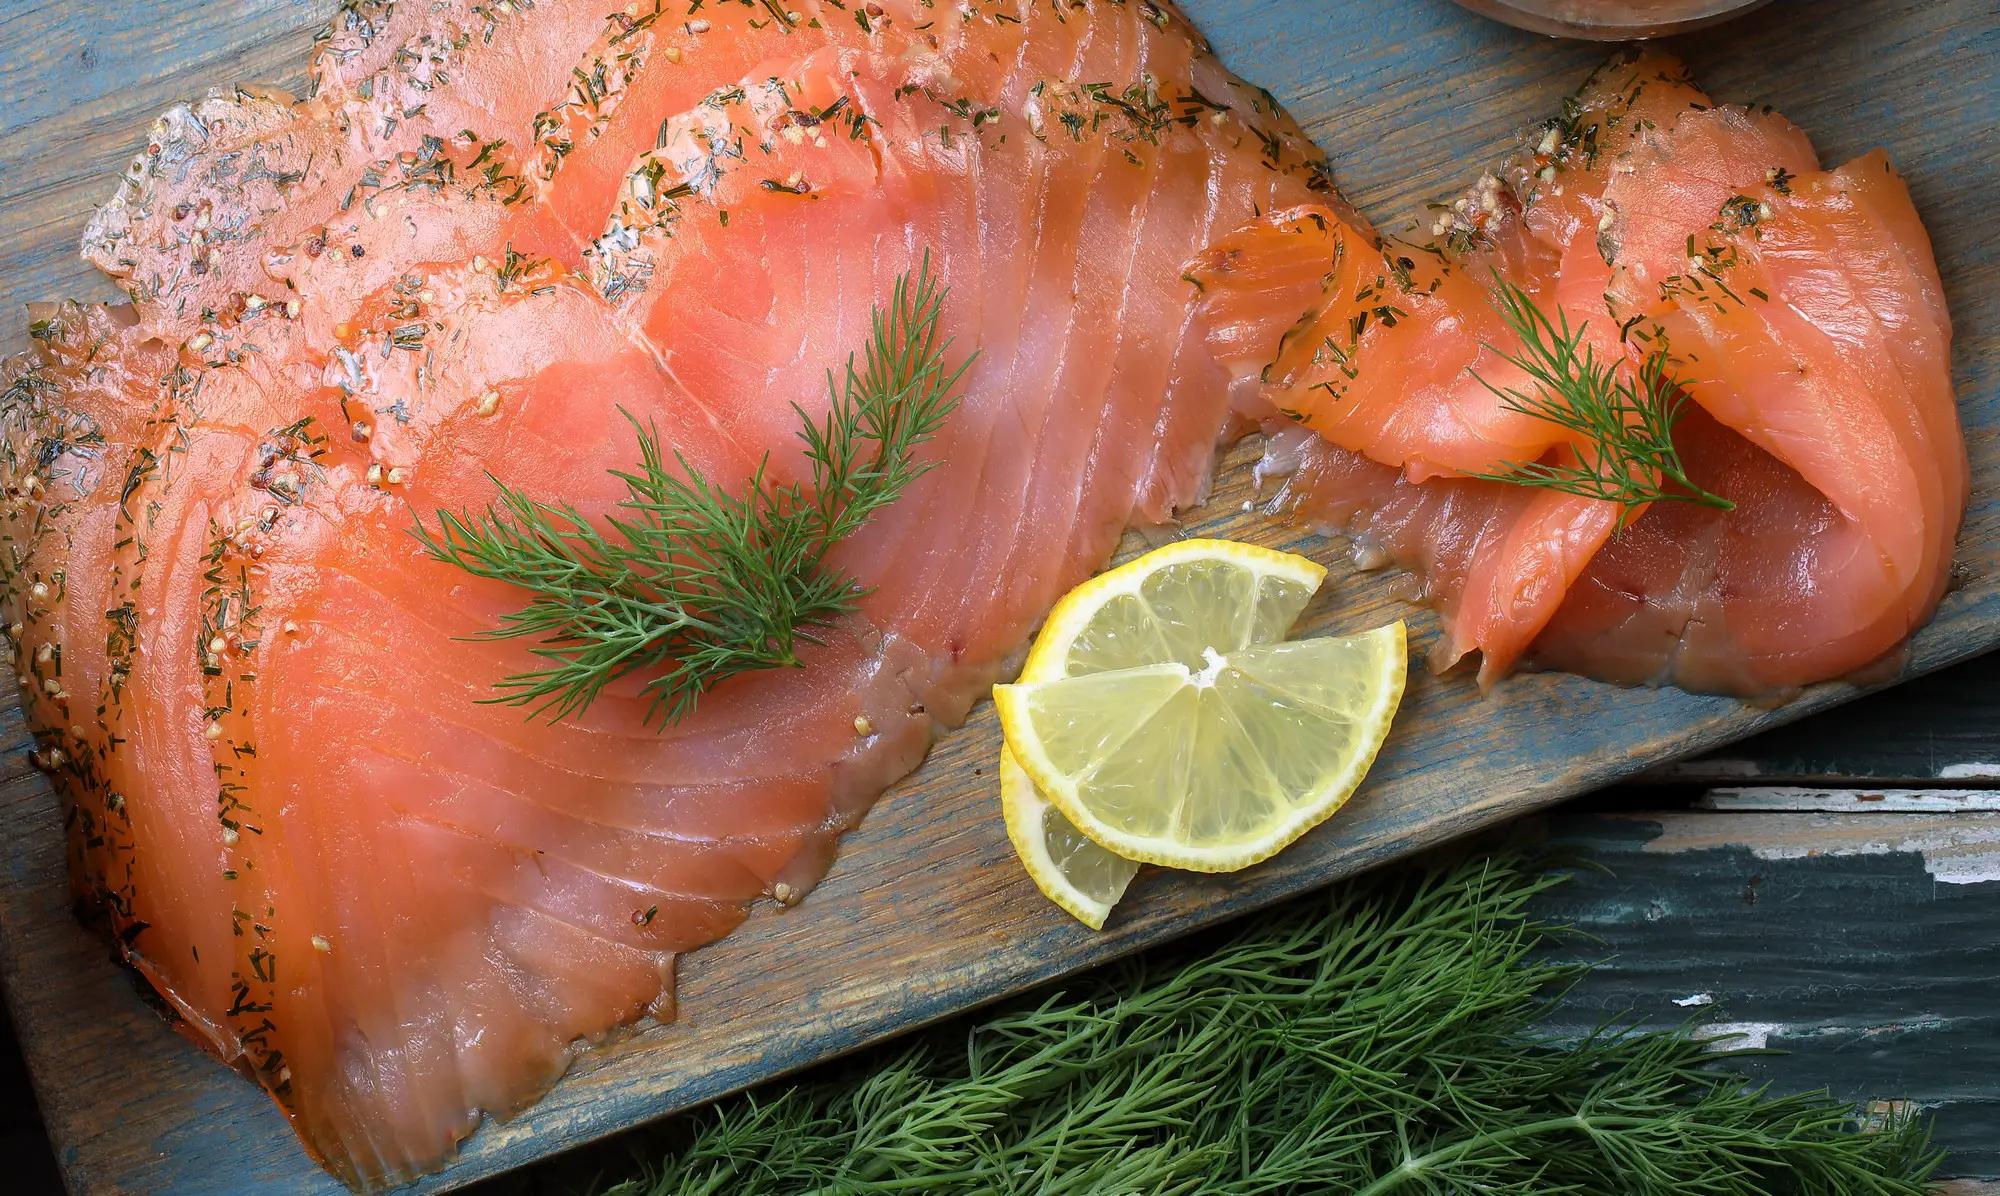 ethical smoked salmon - Can you eat salmon ethically